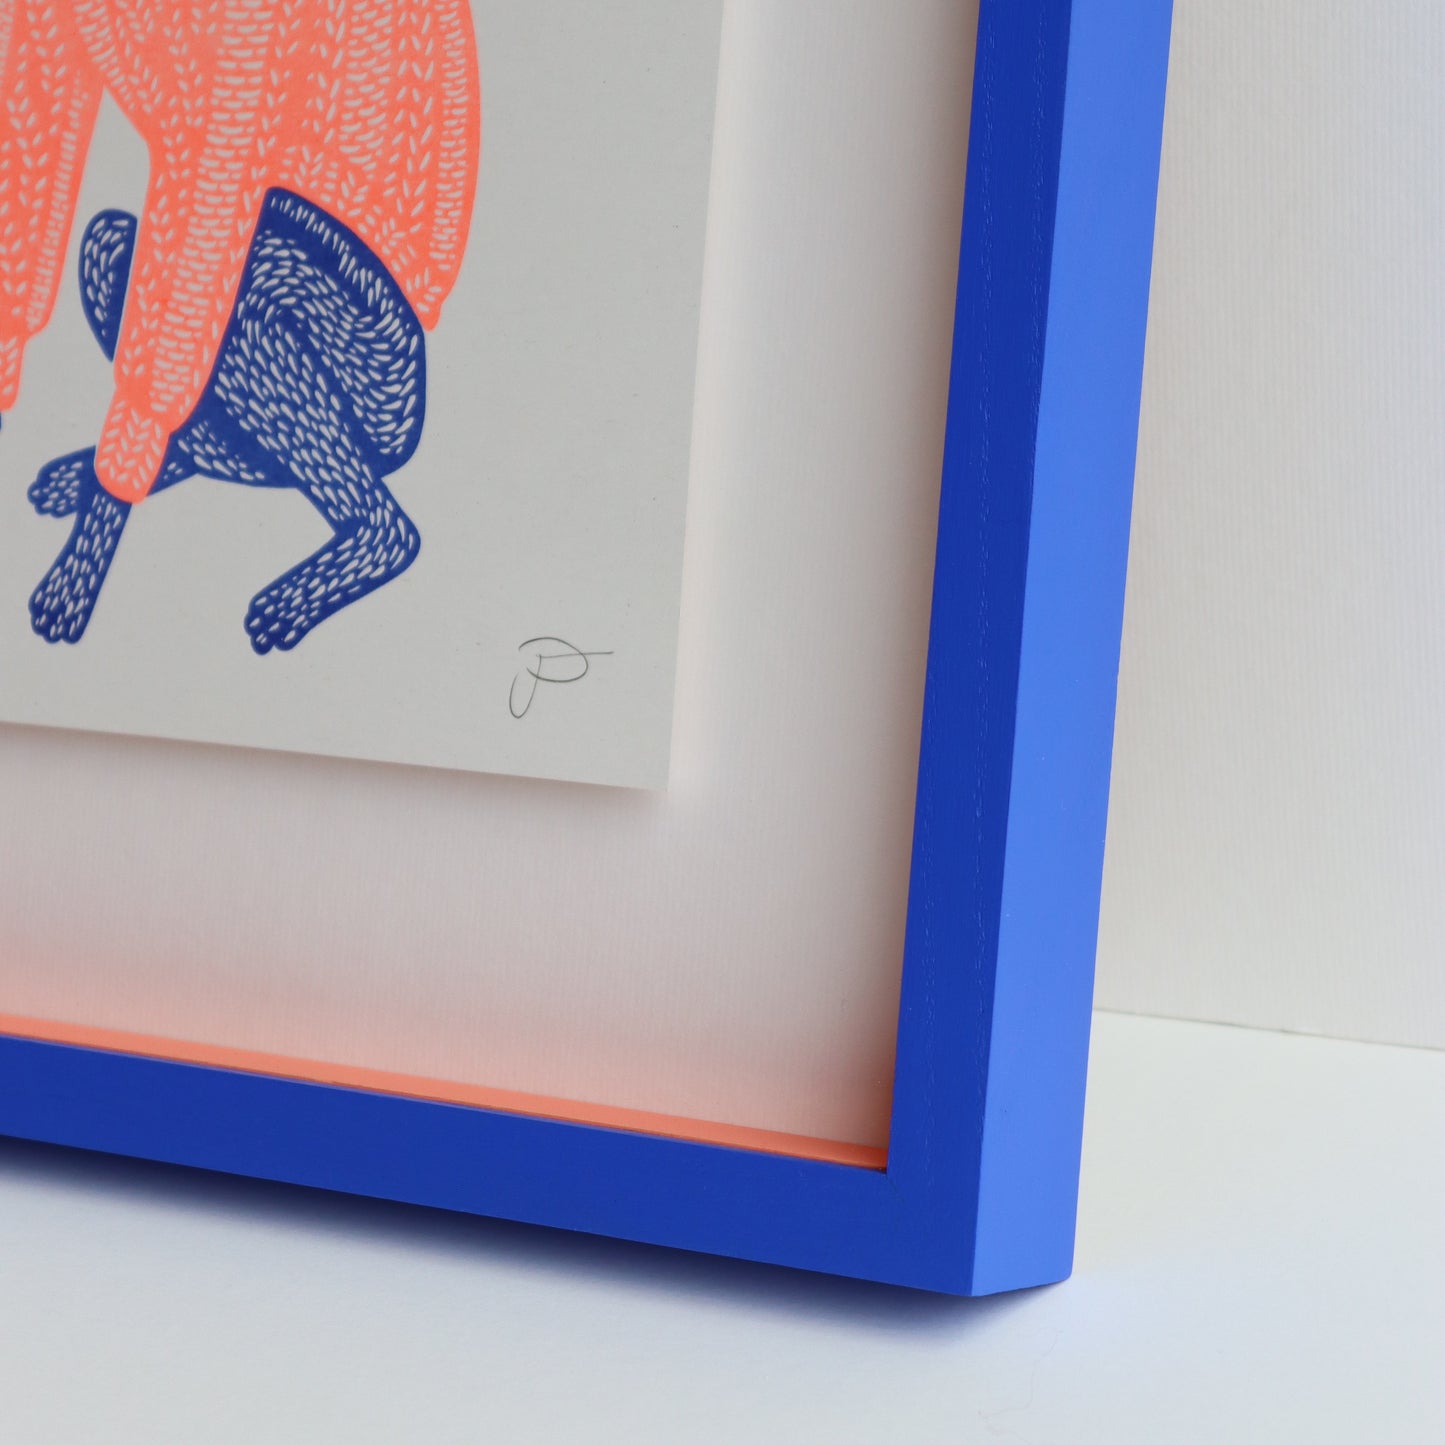 'Knit Picker' Limited Edition Fine Art Print